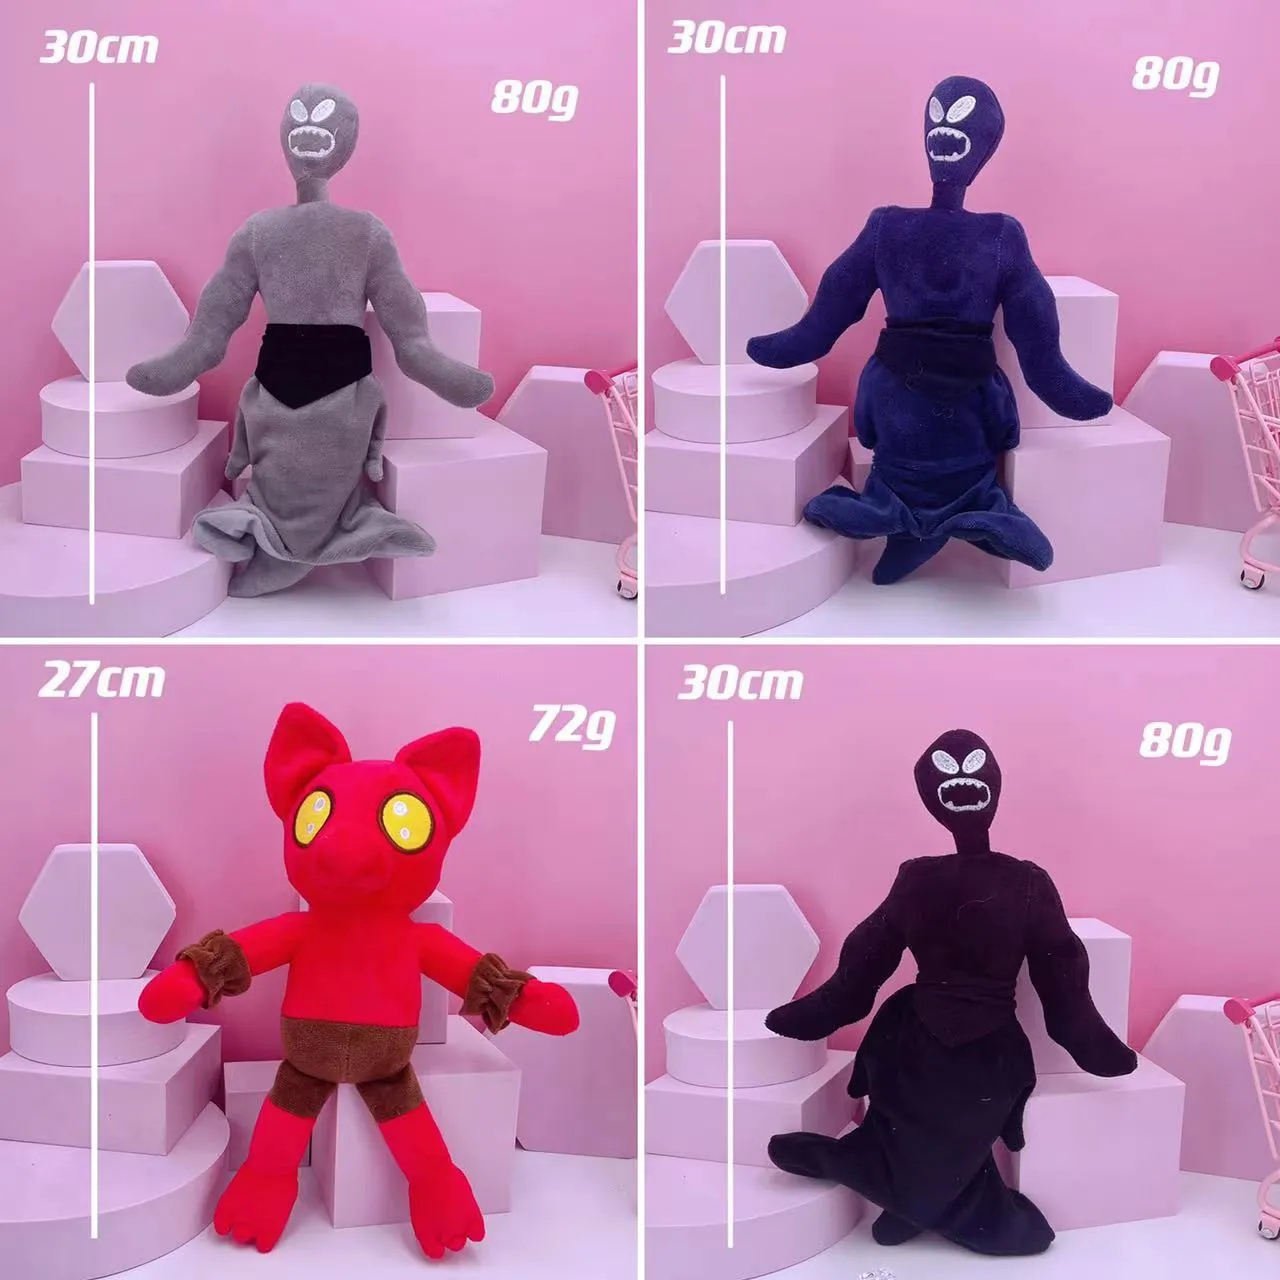 Rainbow Friends Stuffed Plush Horror Smile Doll Red 27cm Kids Toys